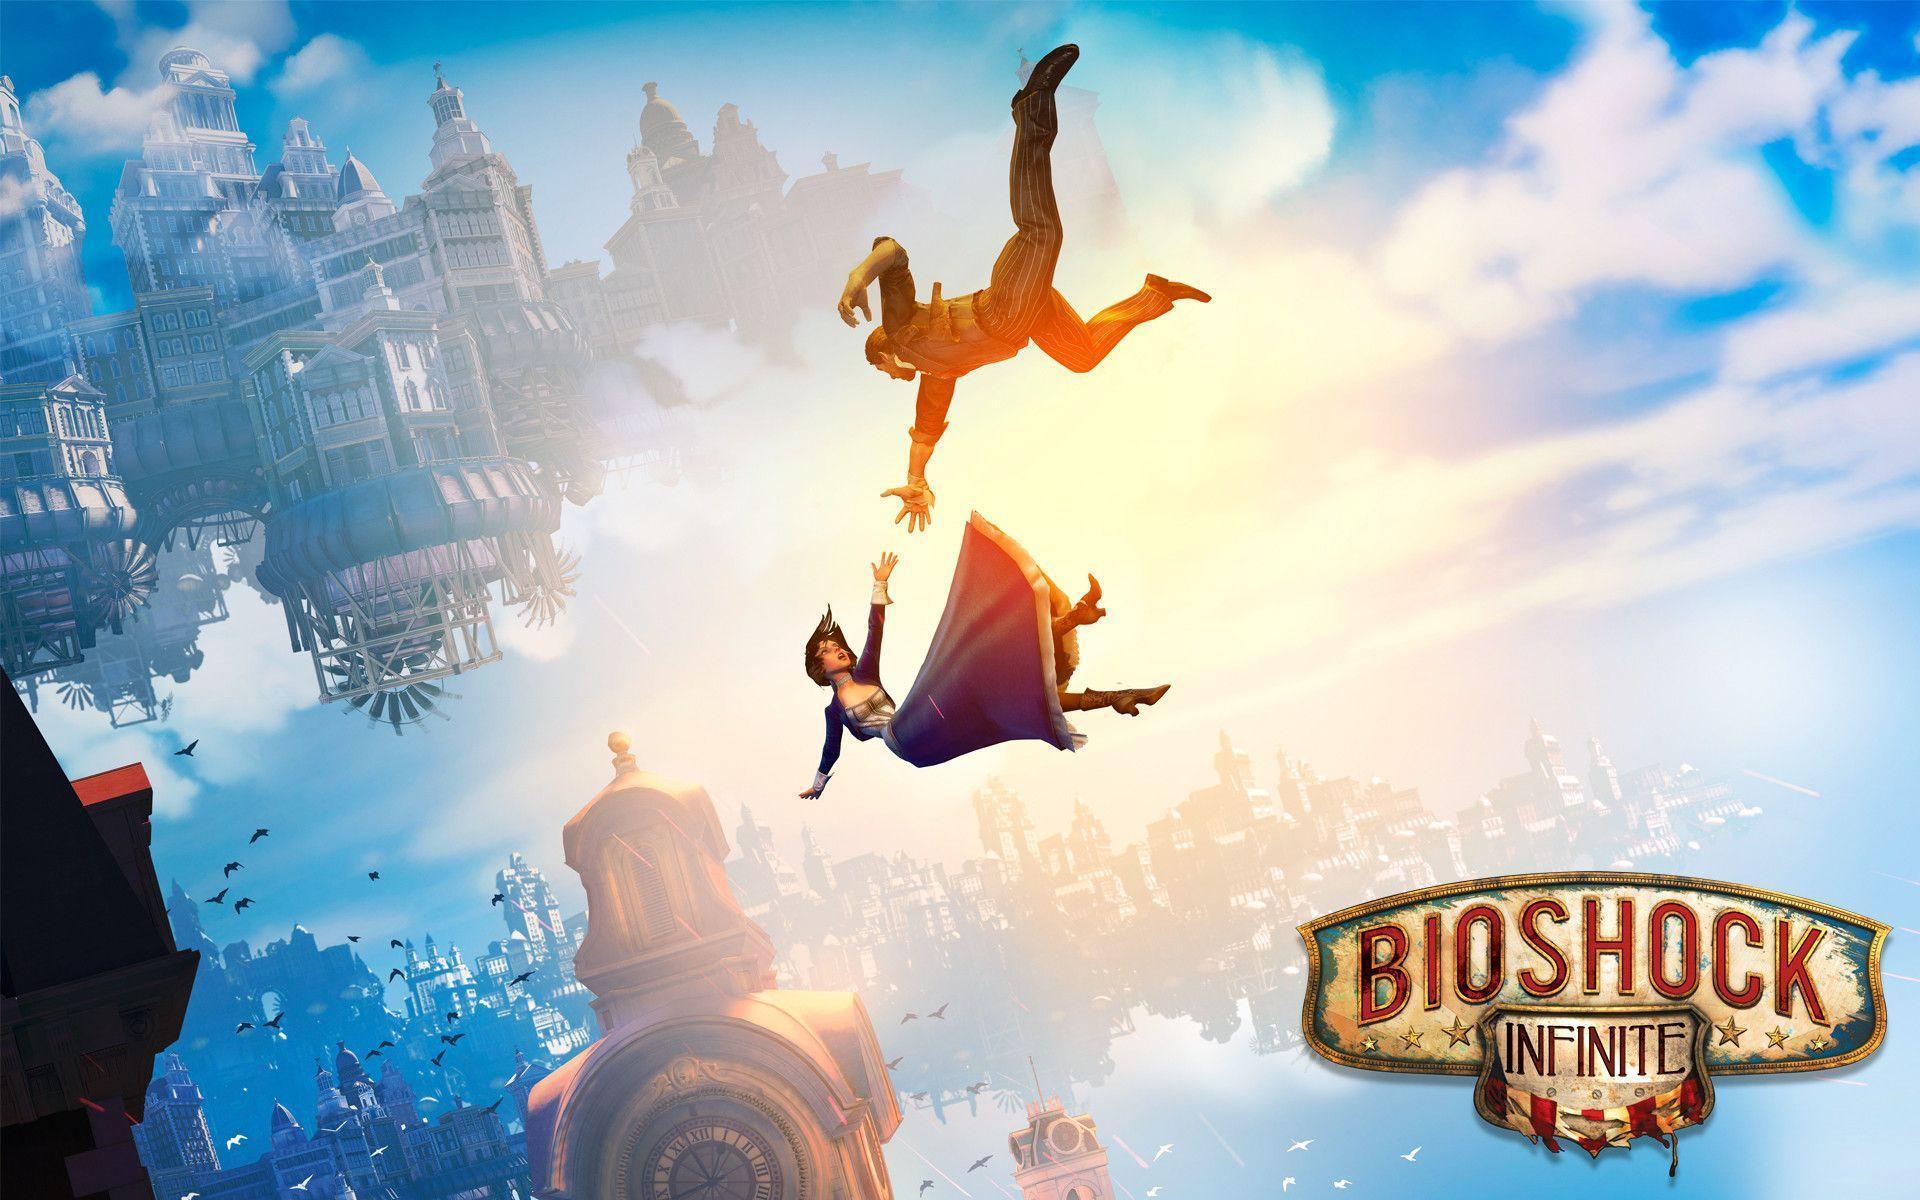 BioShock Infinite 4K Wallpapers - Top